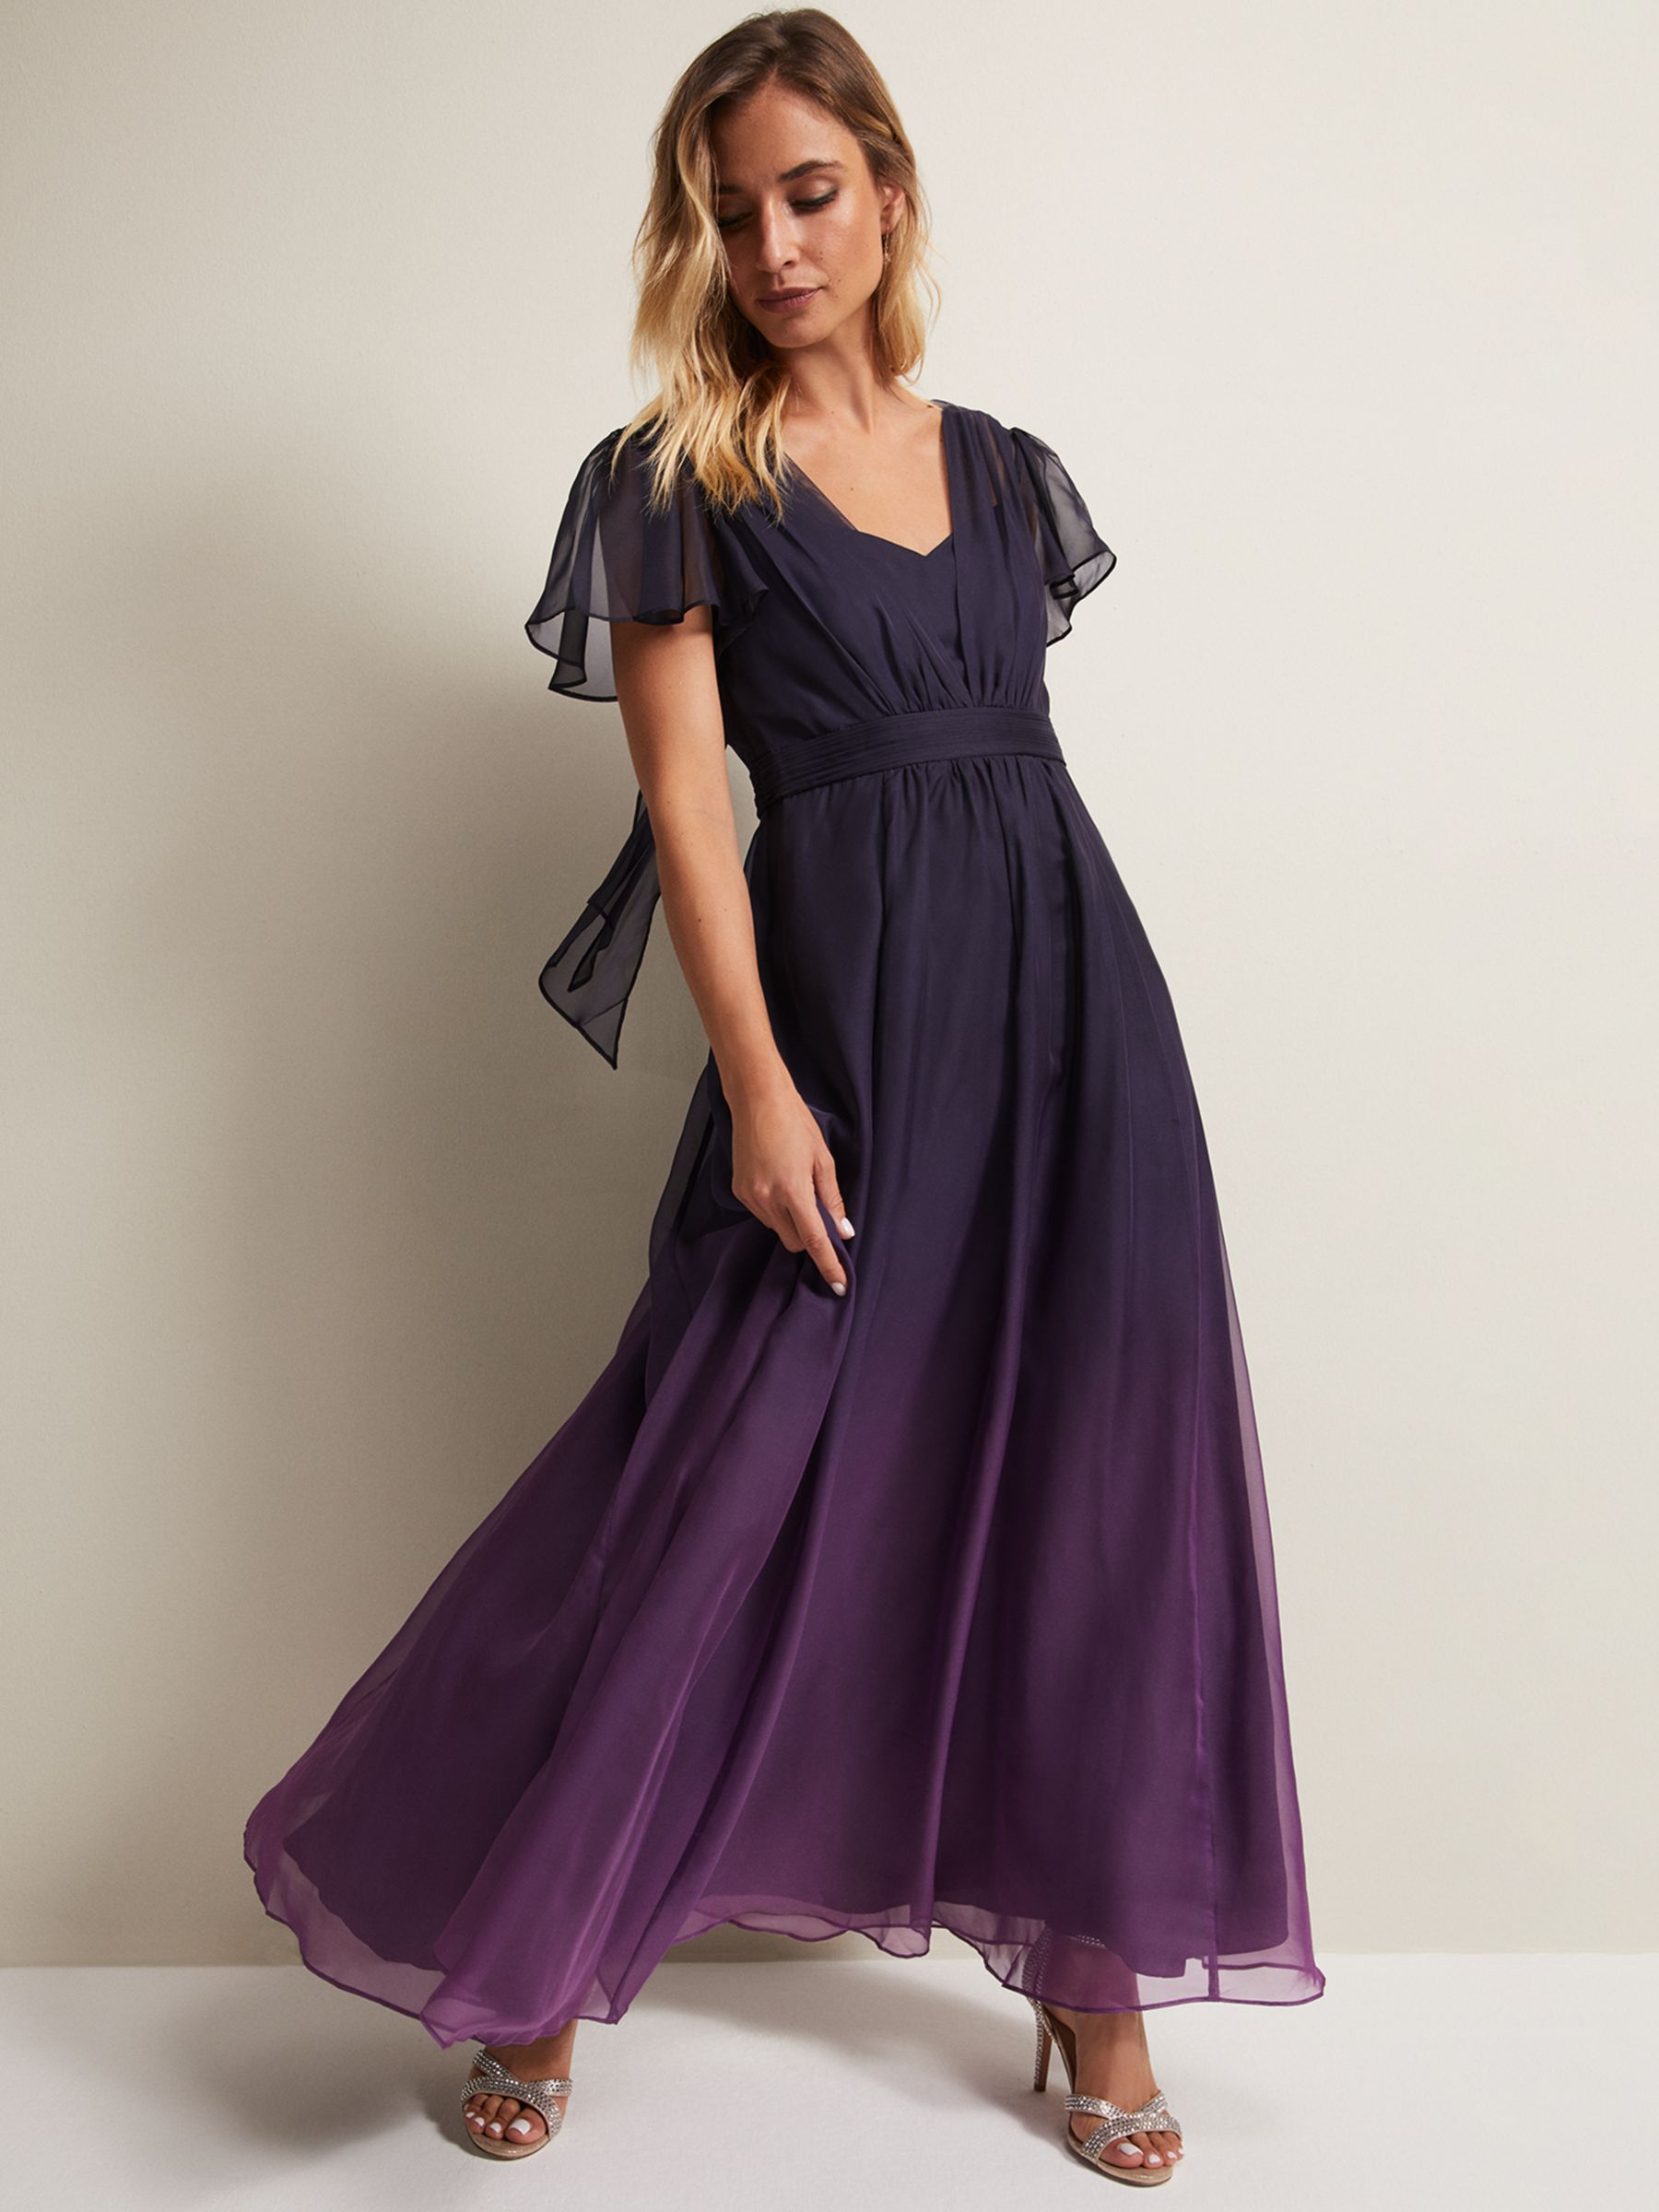 Phase Eight Selene Ombre Maxi Dress, Purple at John Lewis & Partners